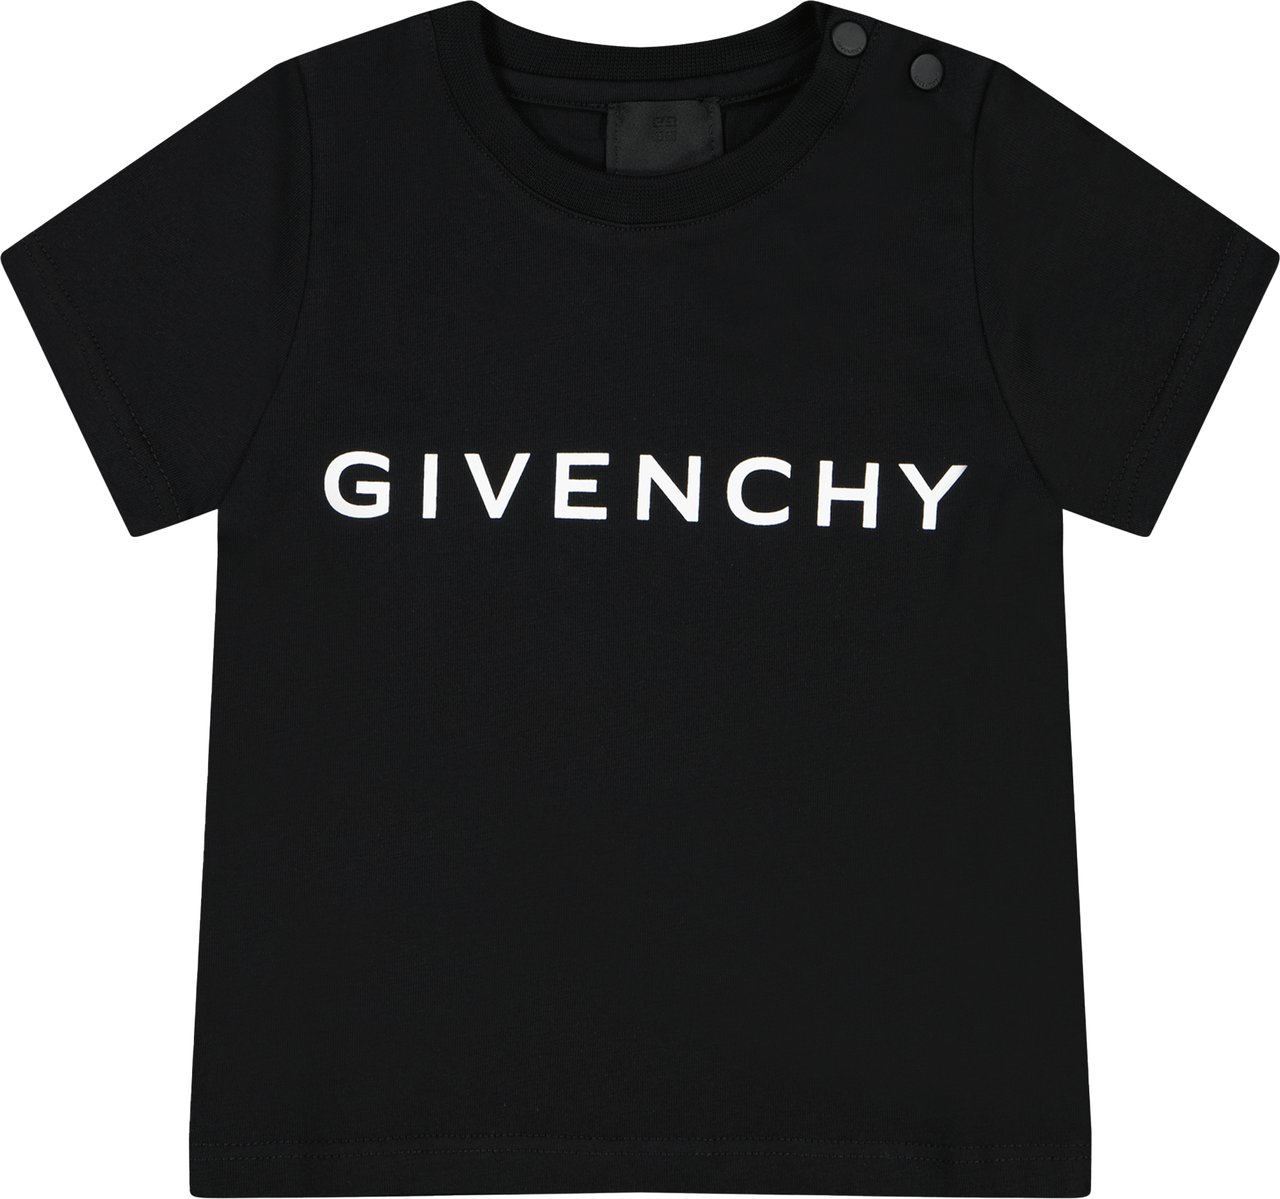 Givenchy Givenchy Baby Jongens T-Shirt Zwart Zwart